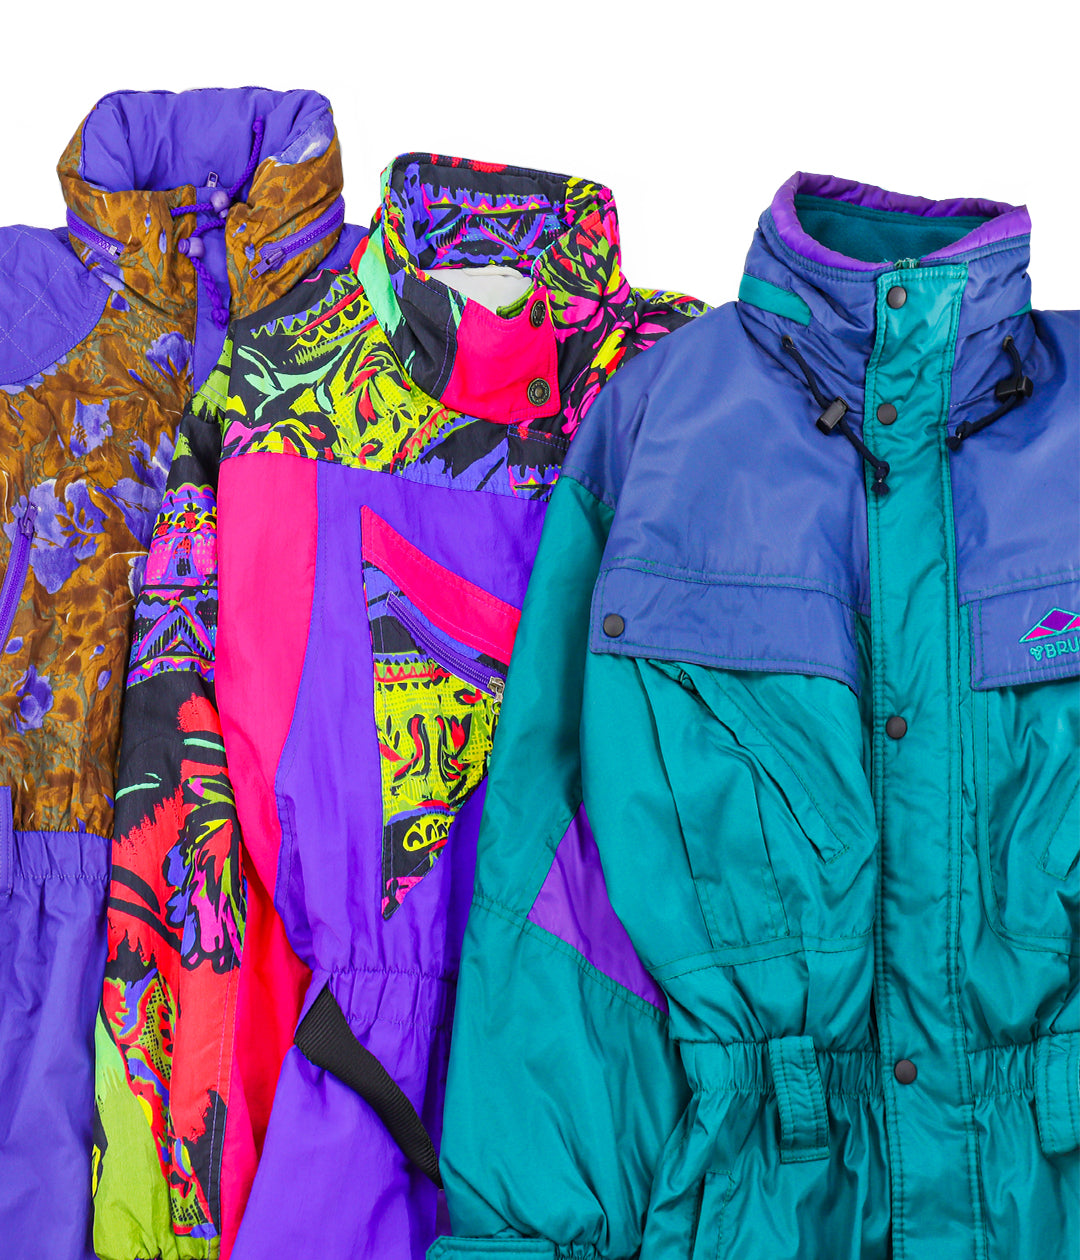 25 kg / Best Selection of Assorted Branded Ski Suits